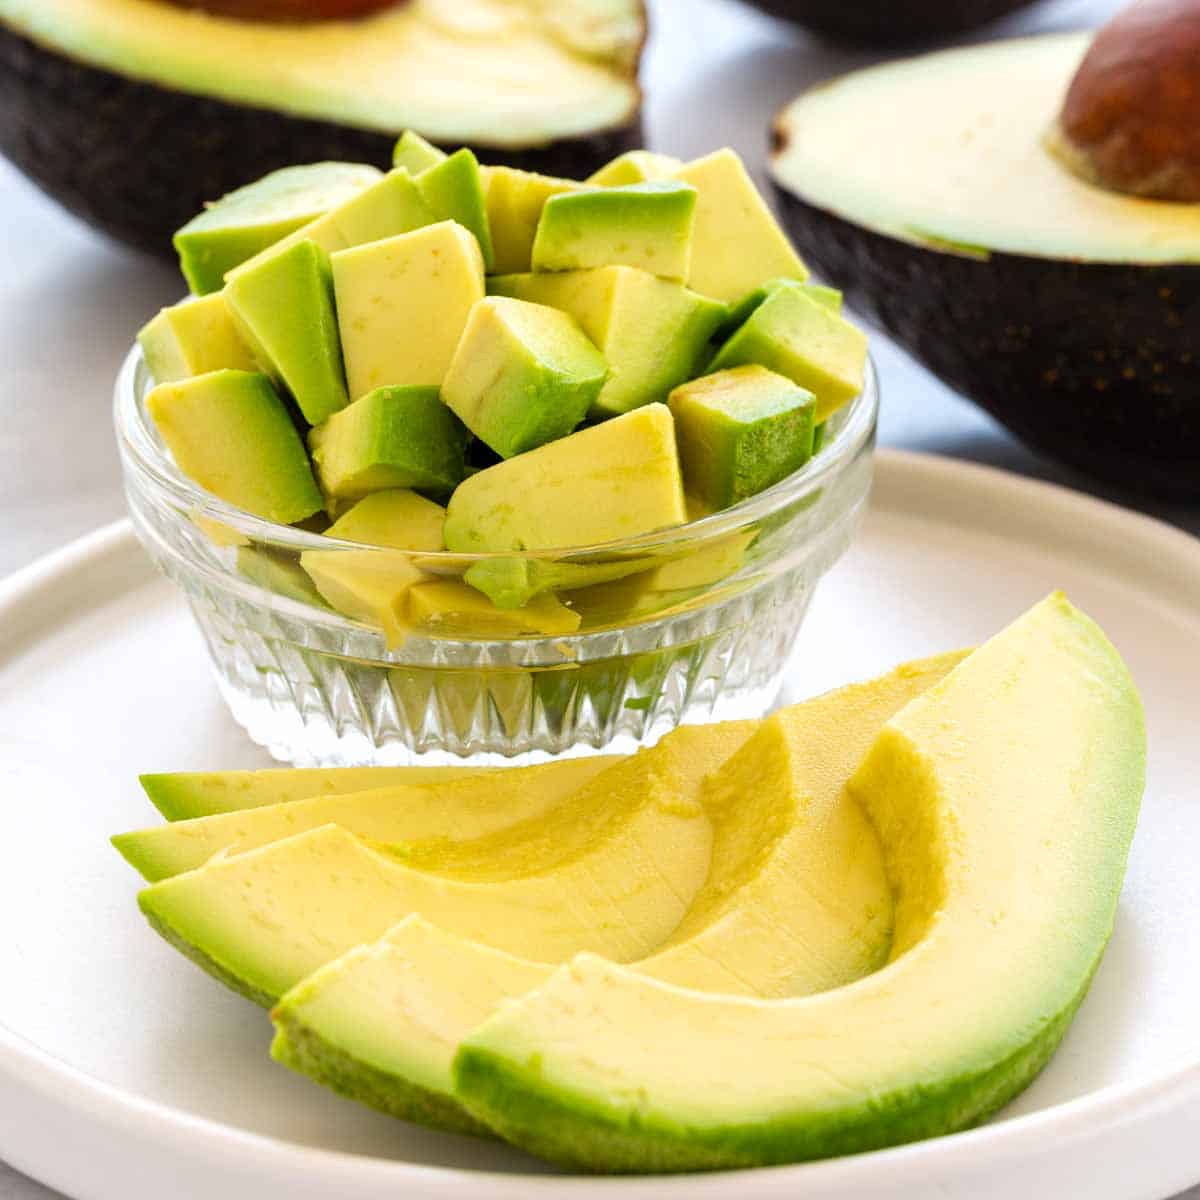 avocado health